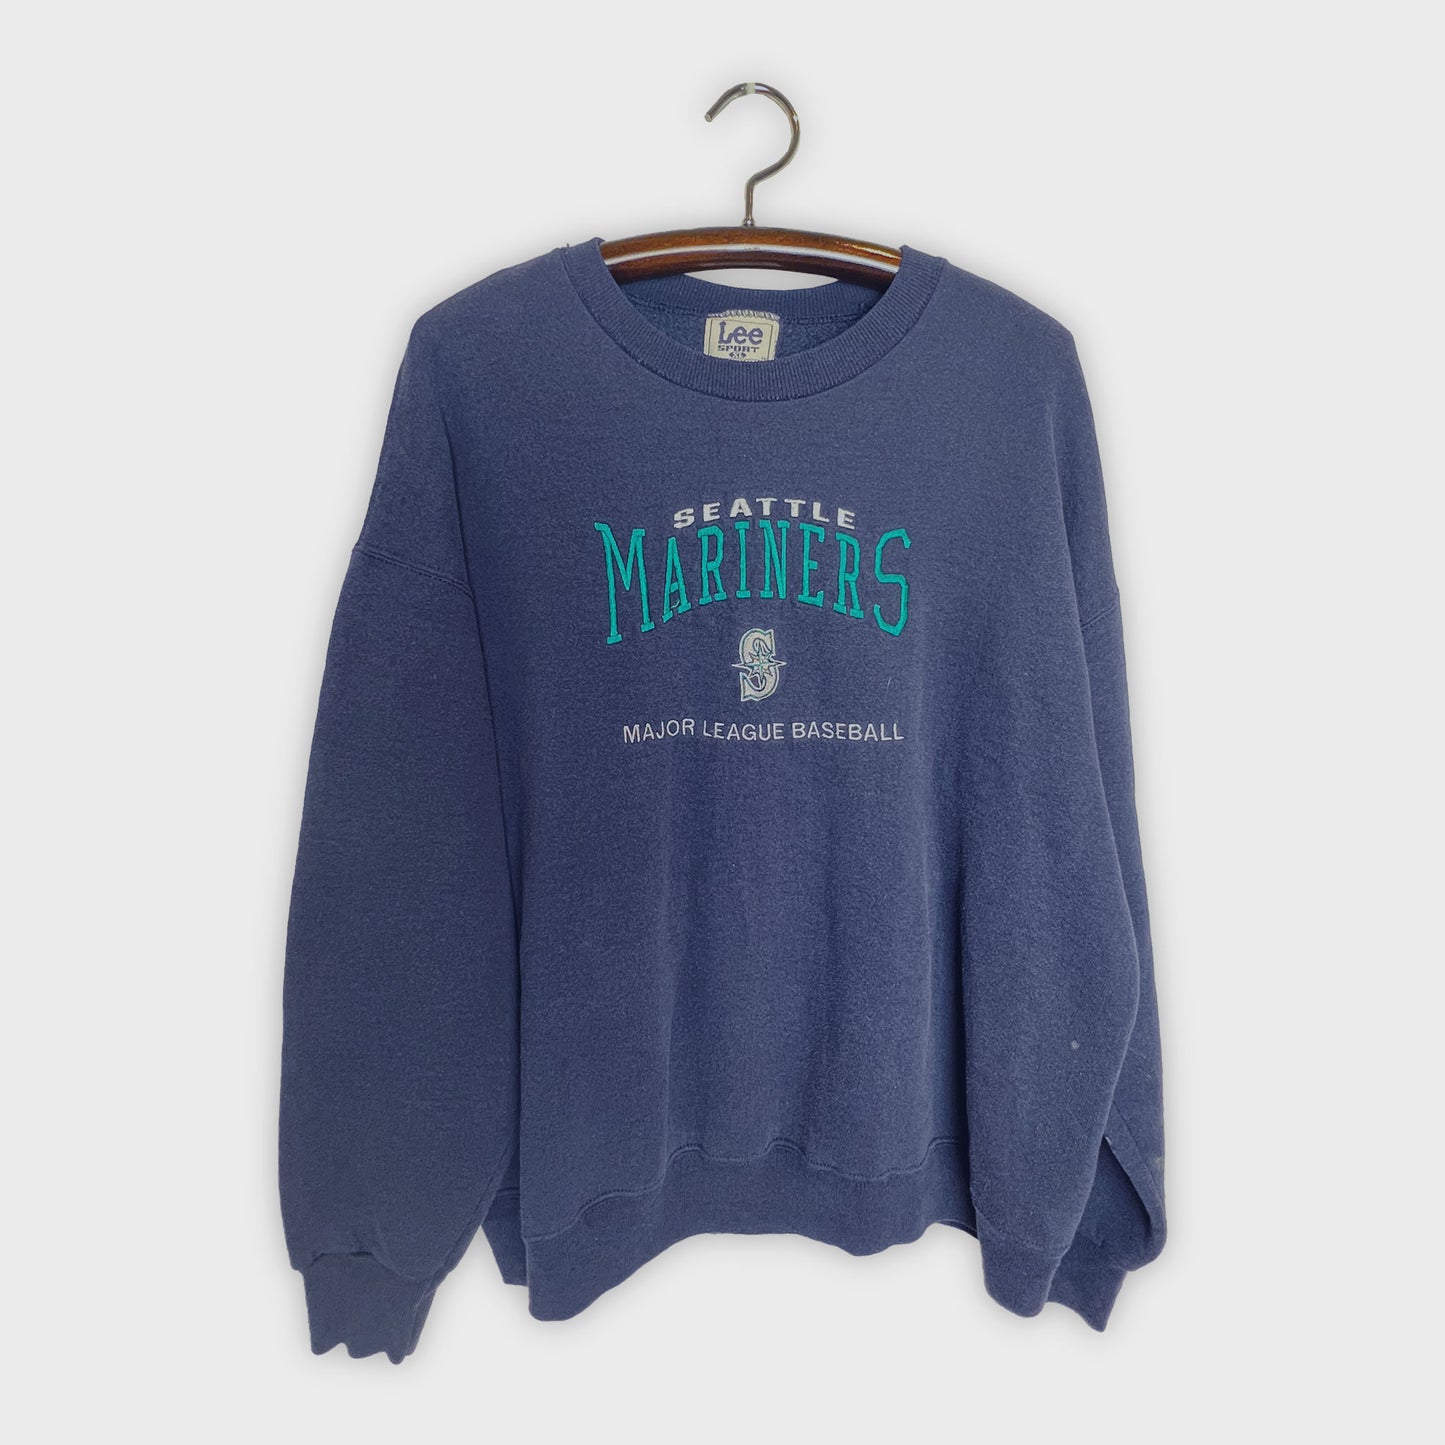 Vintage Seattle Mariners Grey Crew Neck Sweatshirt